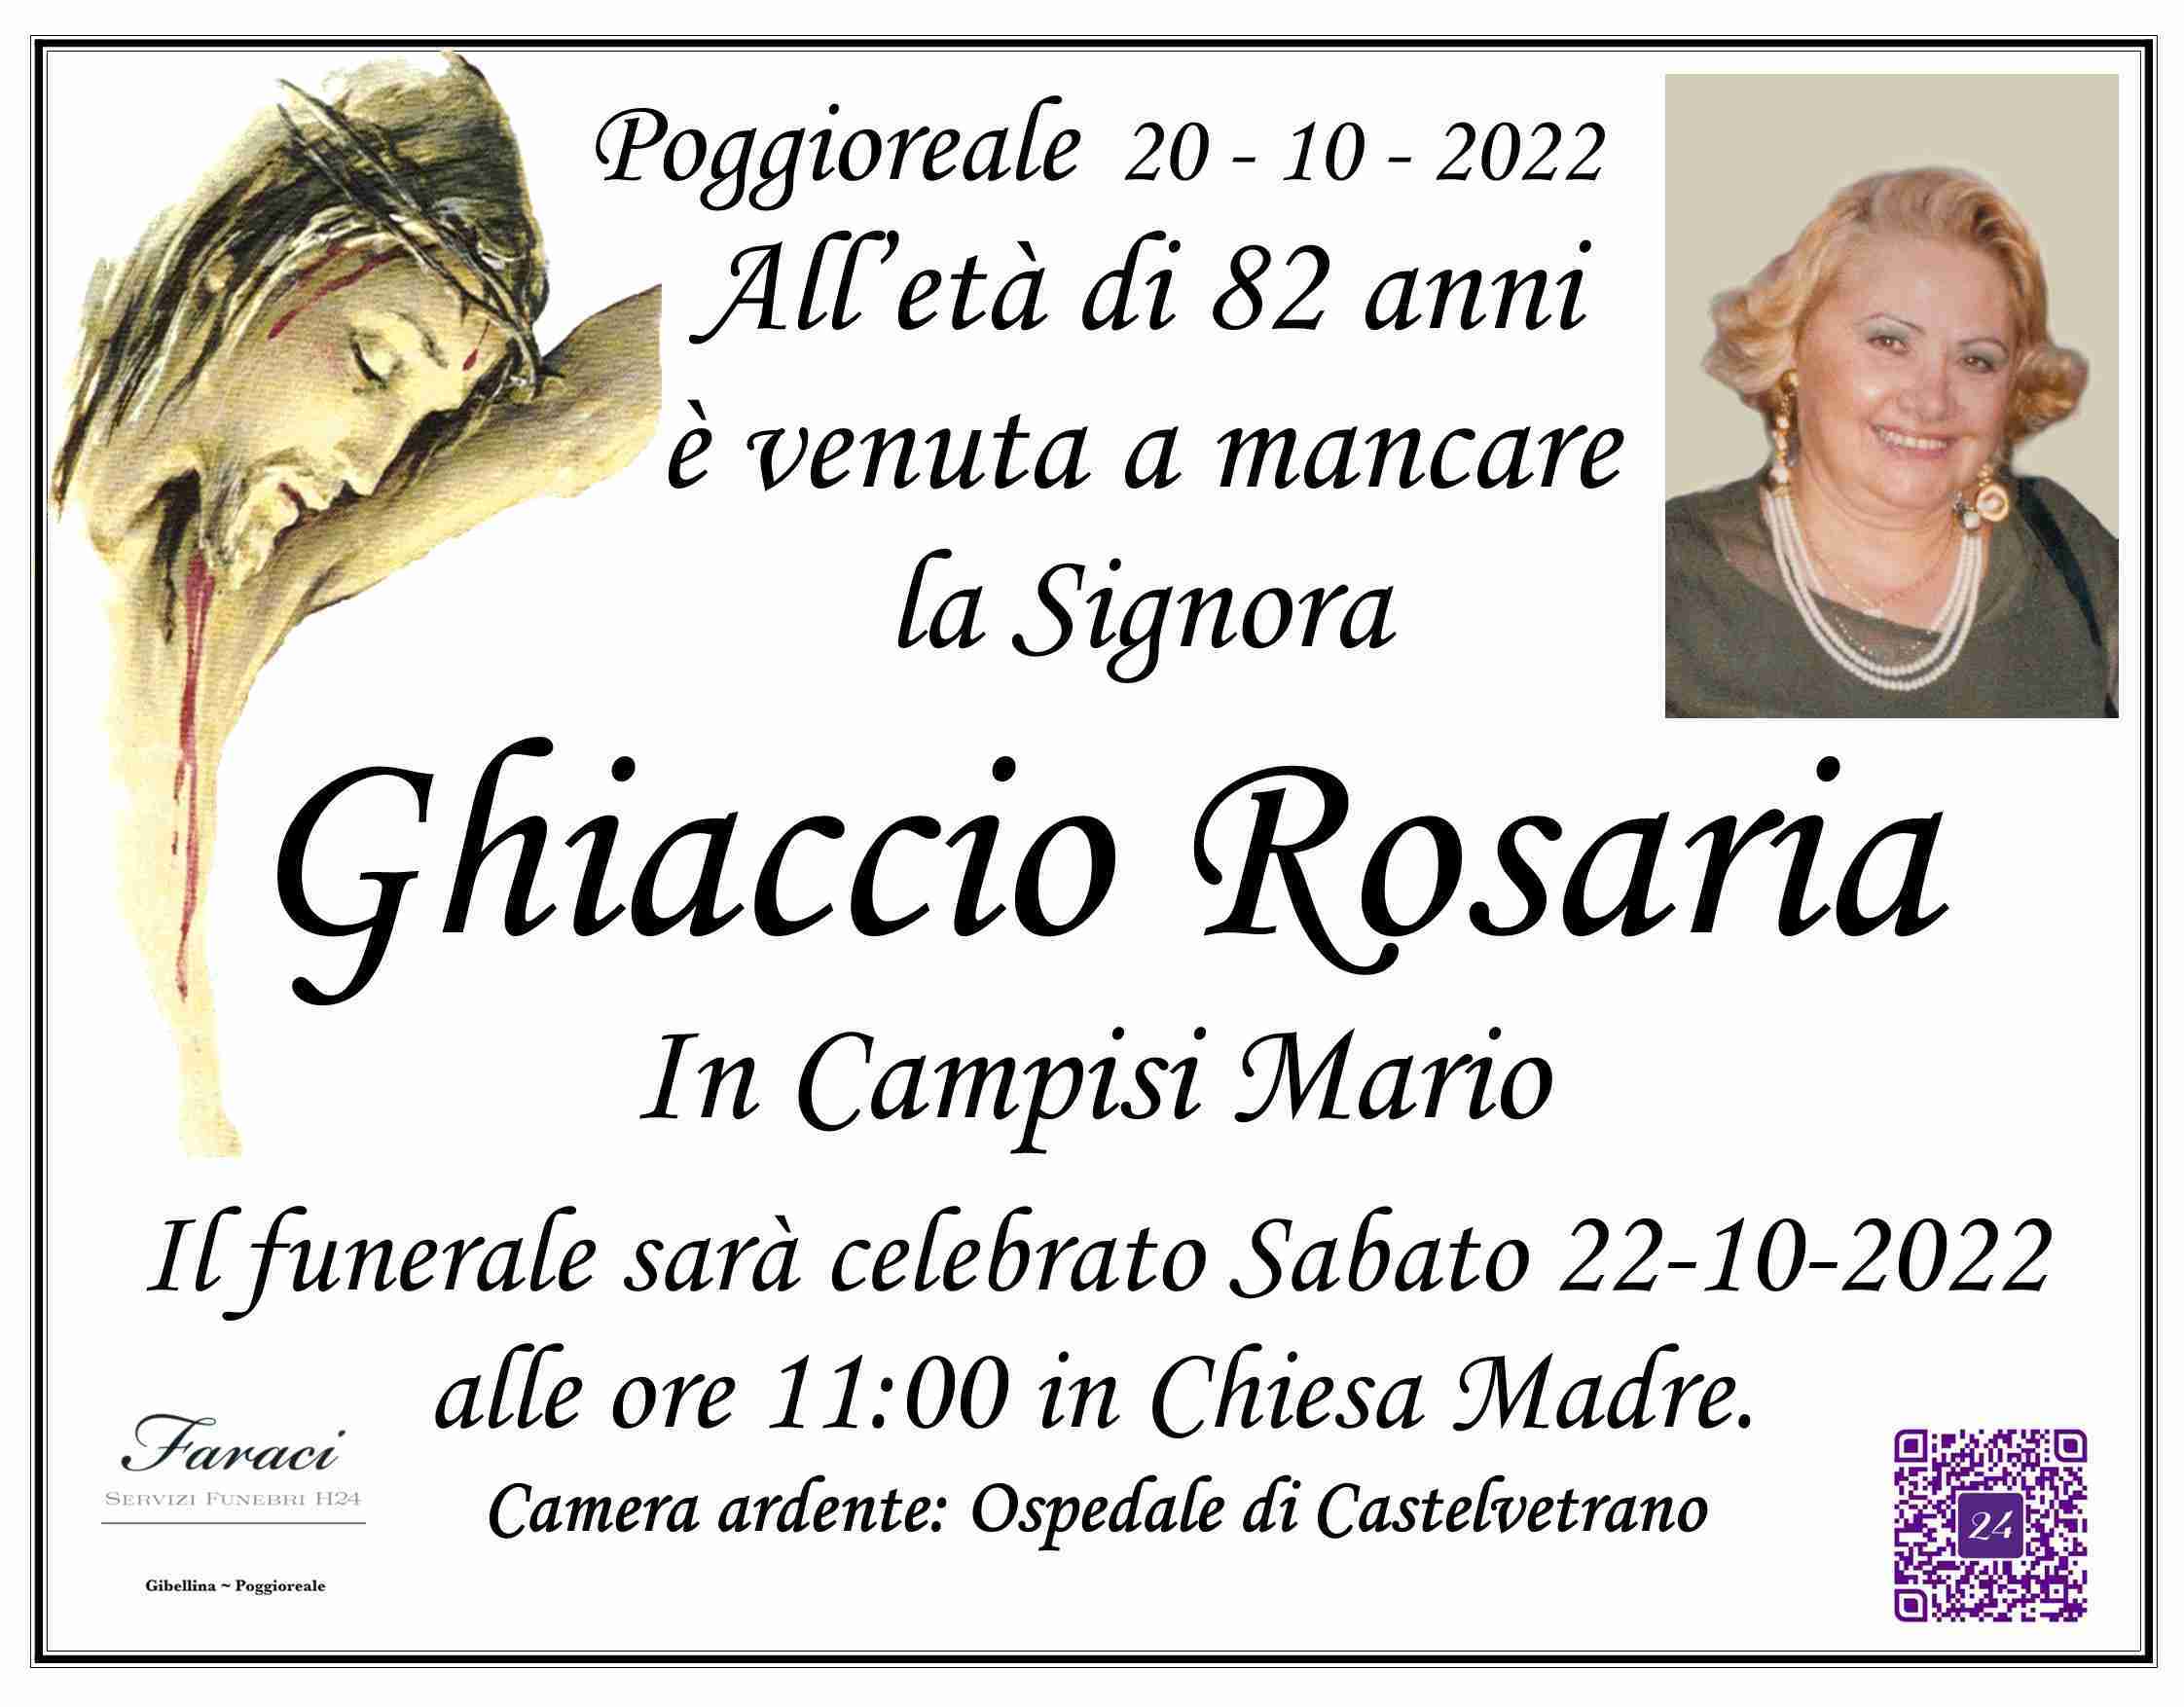 Rosaria Ghiaccio